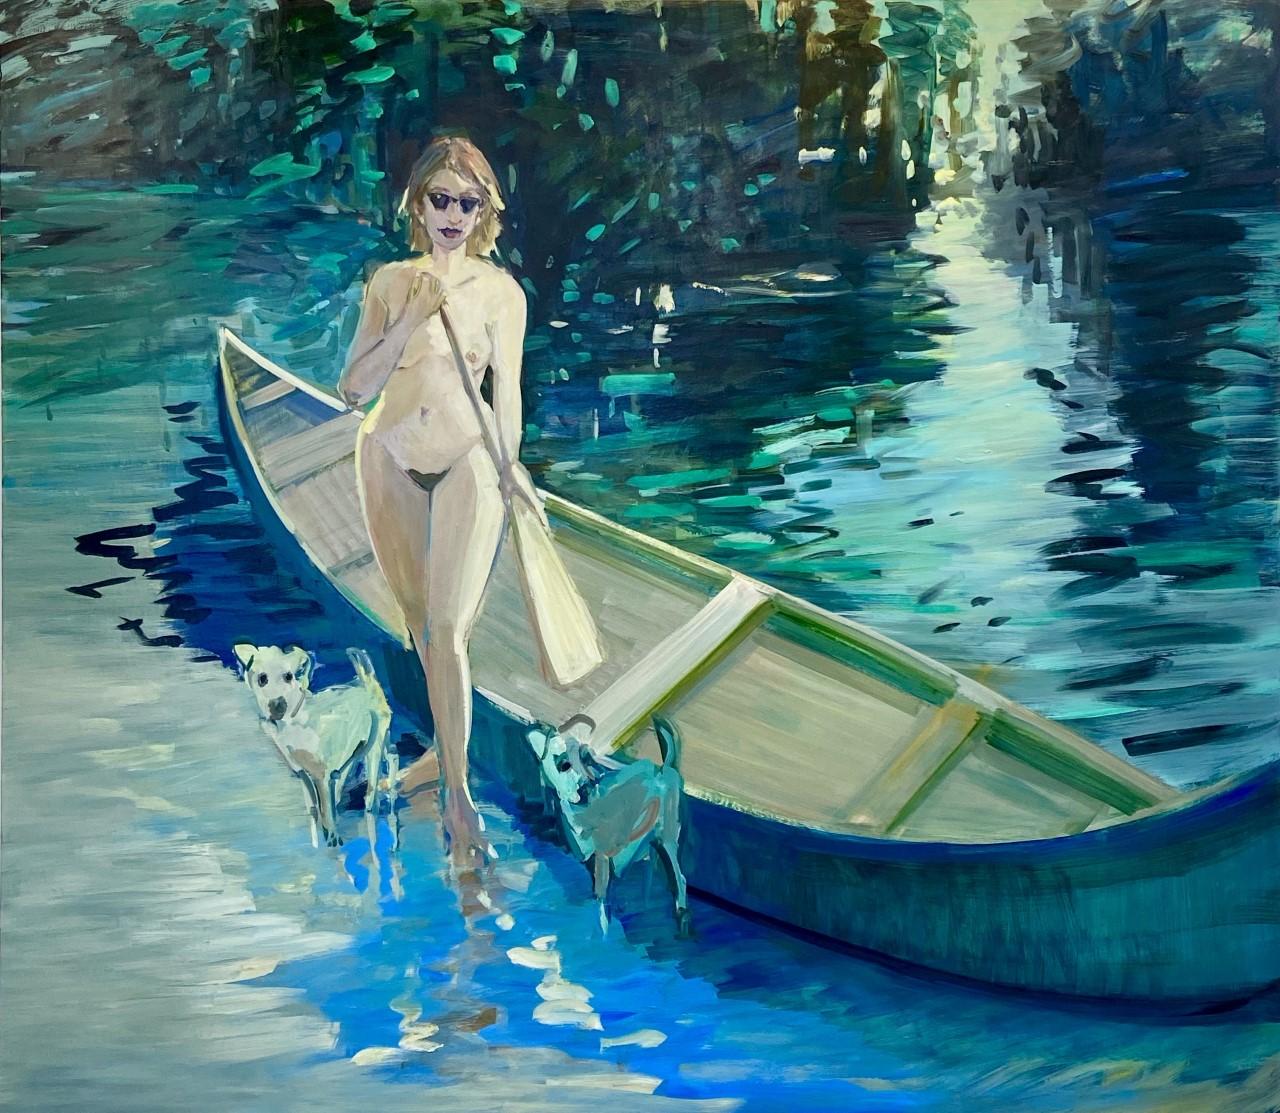 Deborah Brown Nude Painting - "The Paddler" - figurative nude, oil on canvas